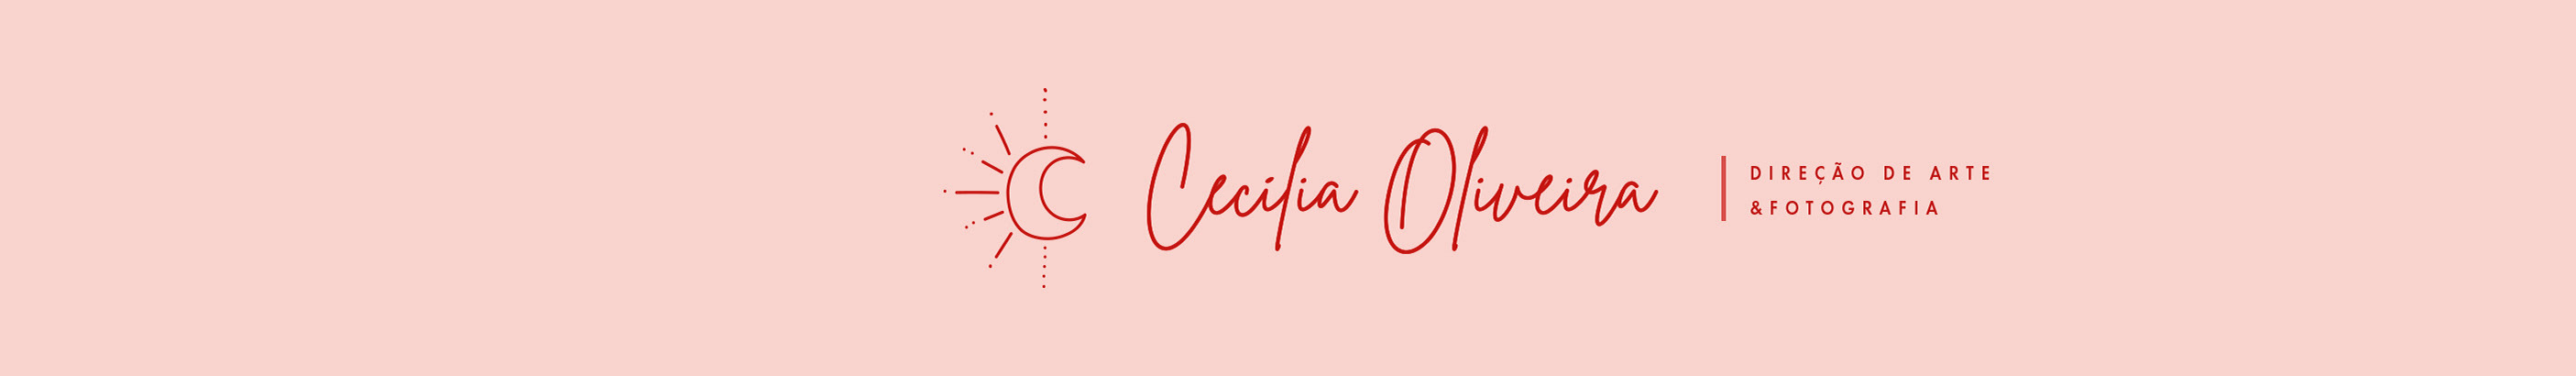 Cecília Oliveira のプロファイルバナー